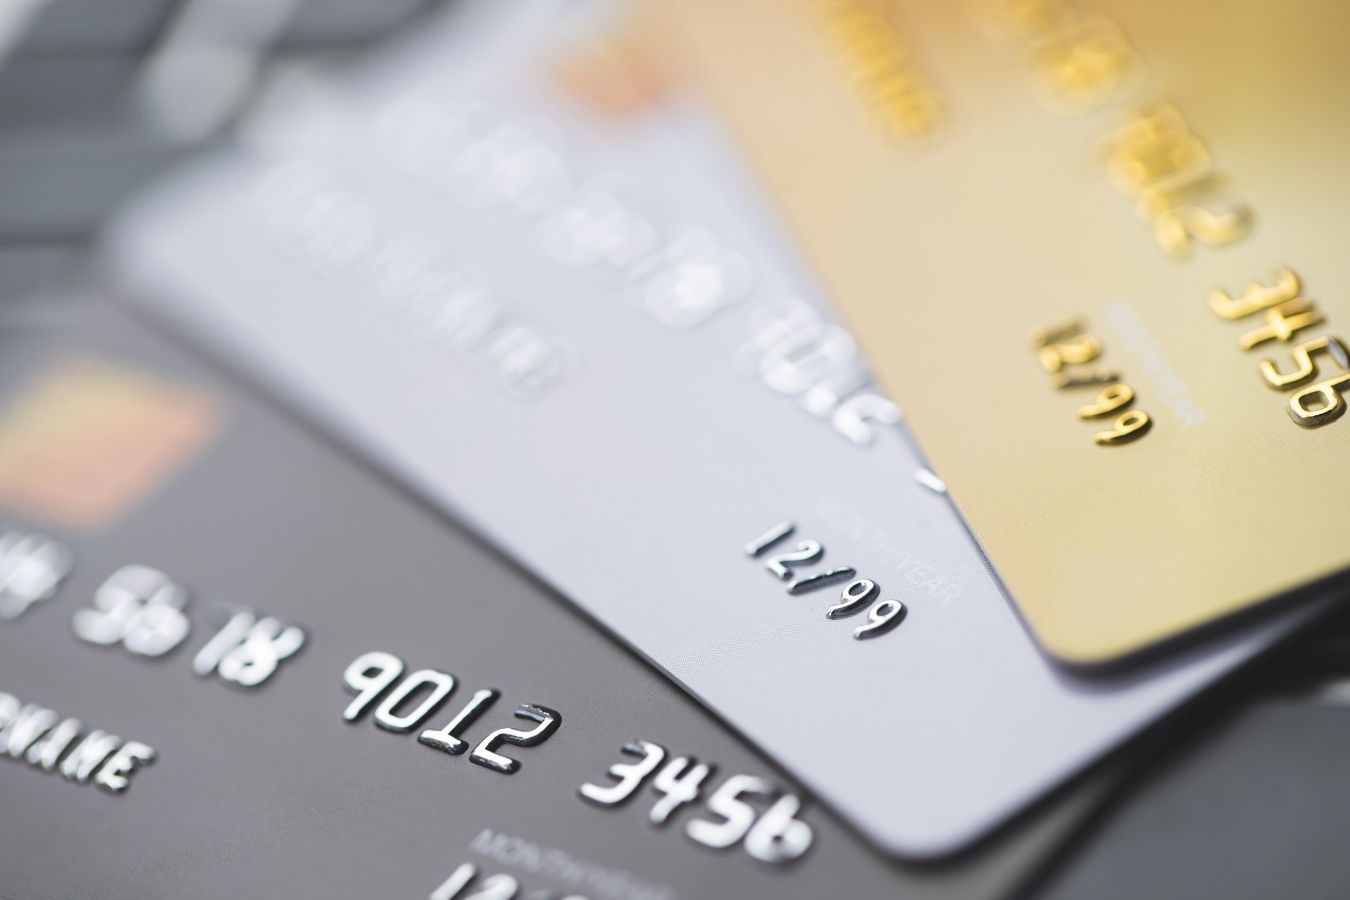 CUB Debit Card – CUB Prepaid Card